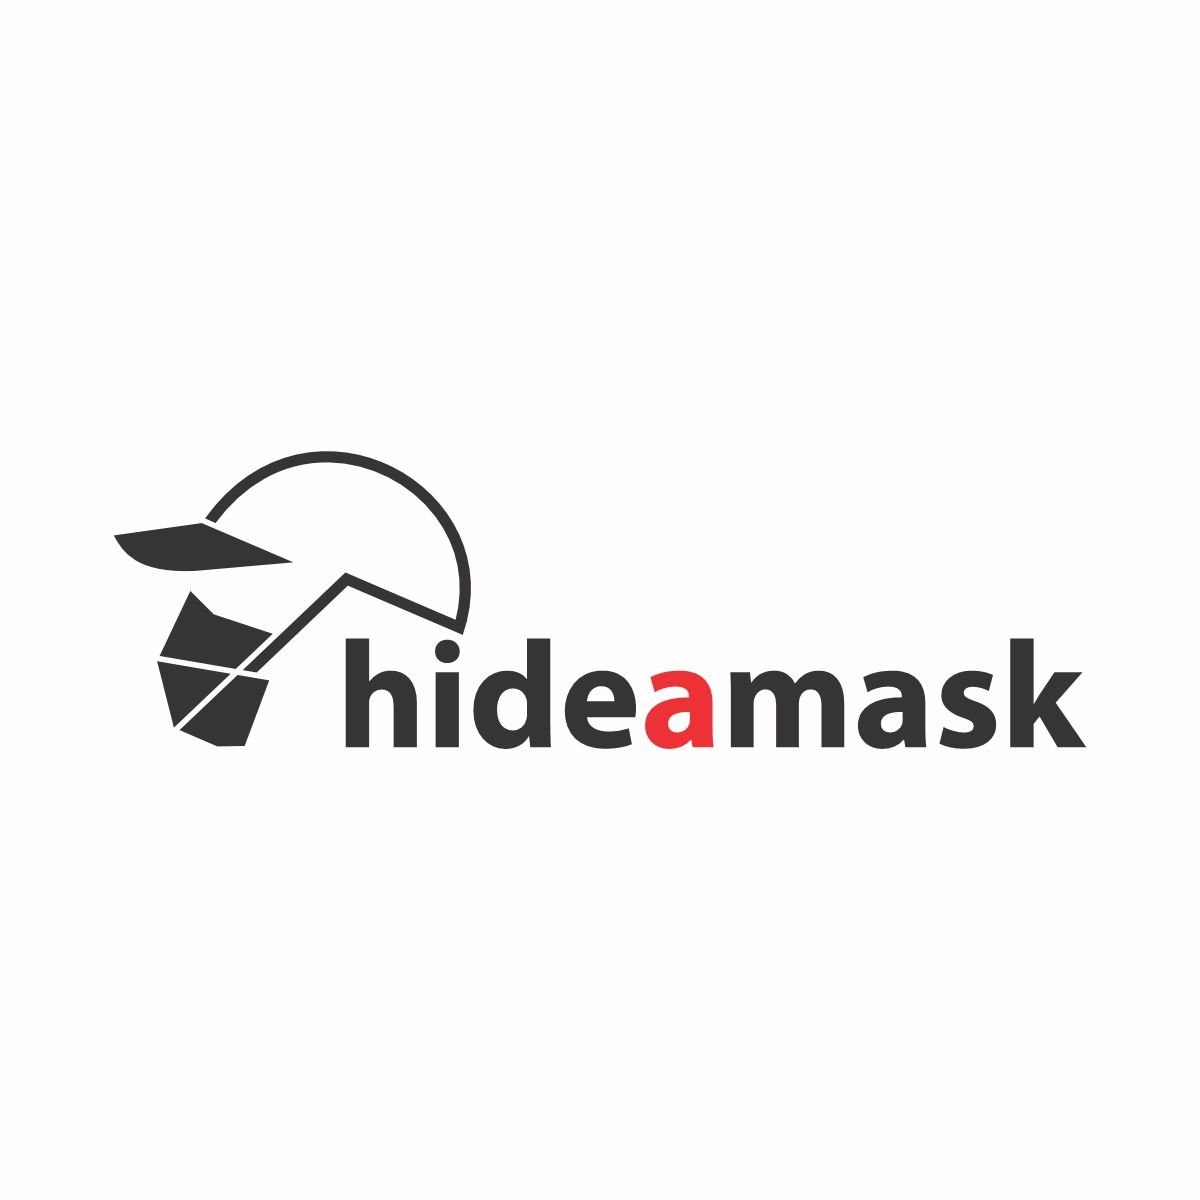 Hideamask Logo